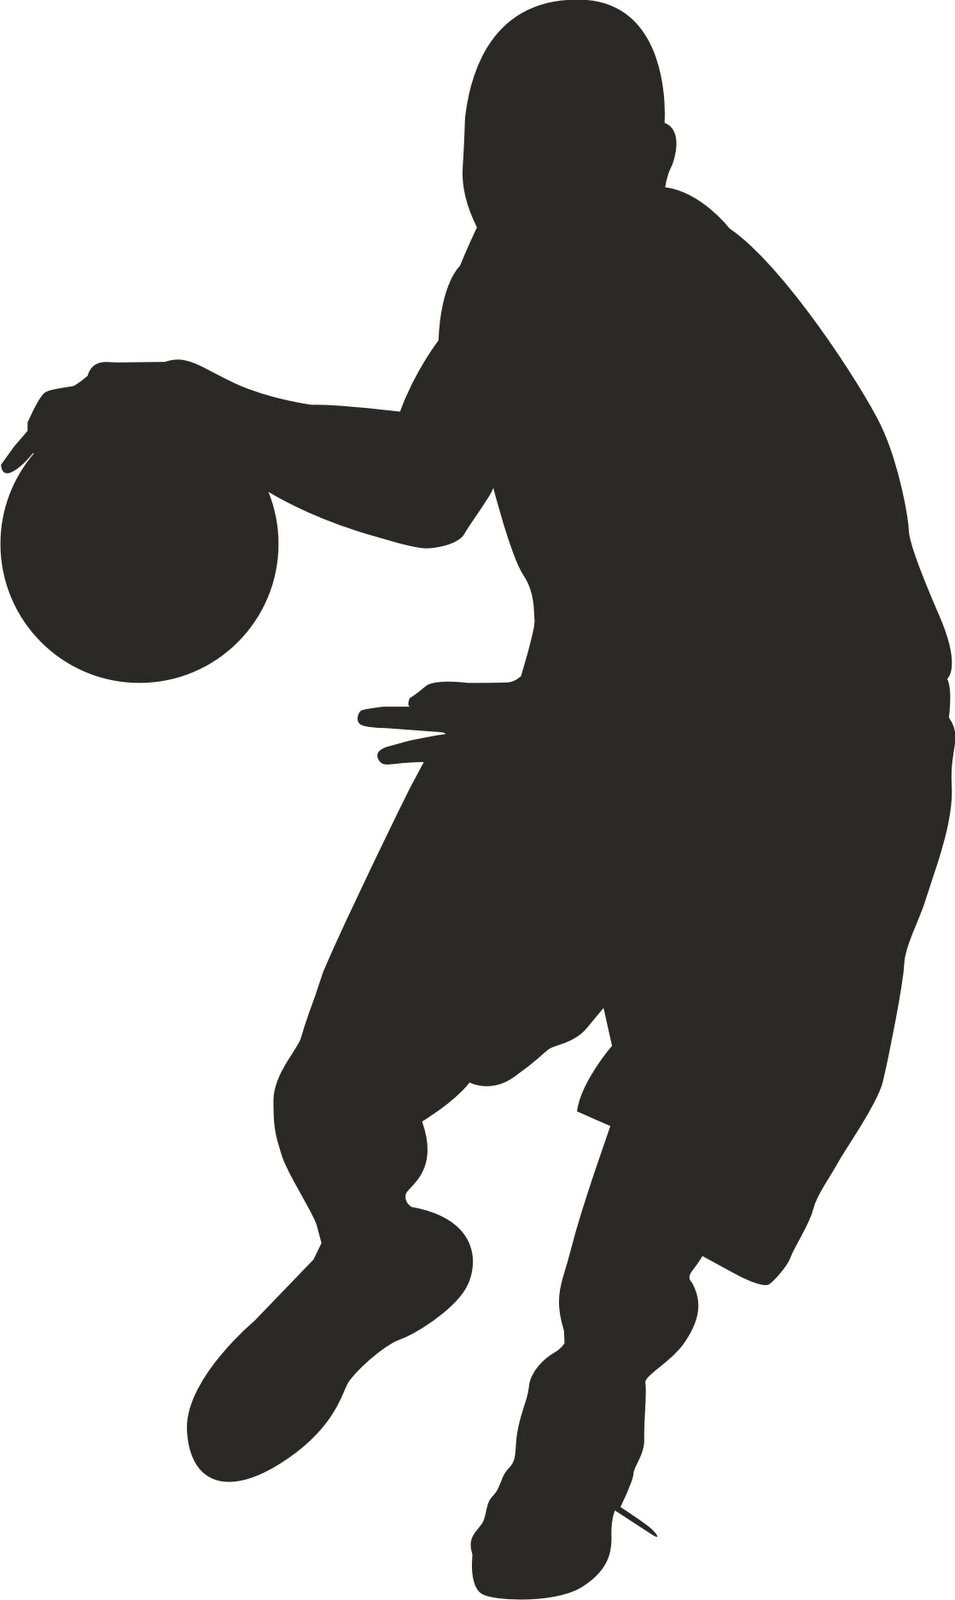 Olney ISD - Olney High School Boys Basketball